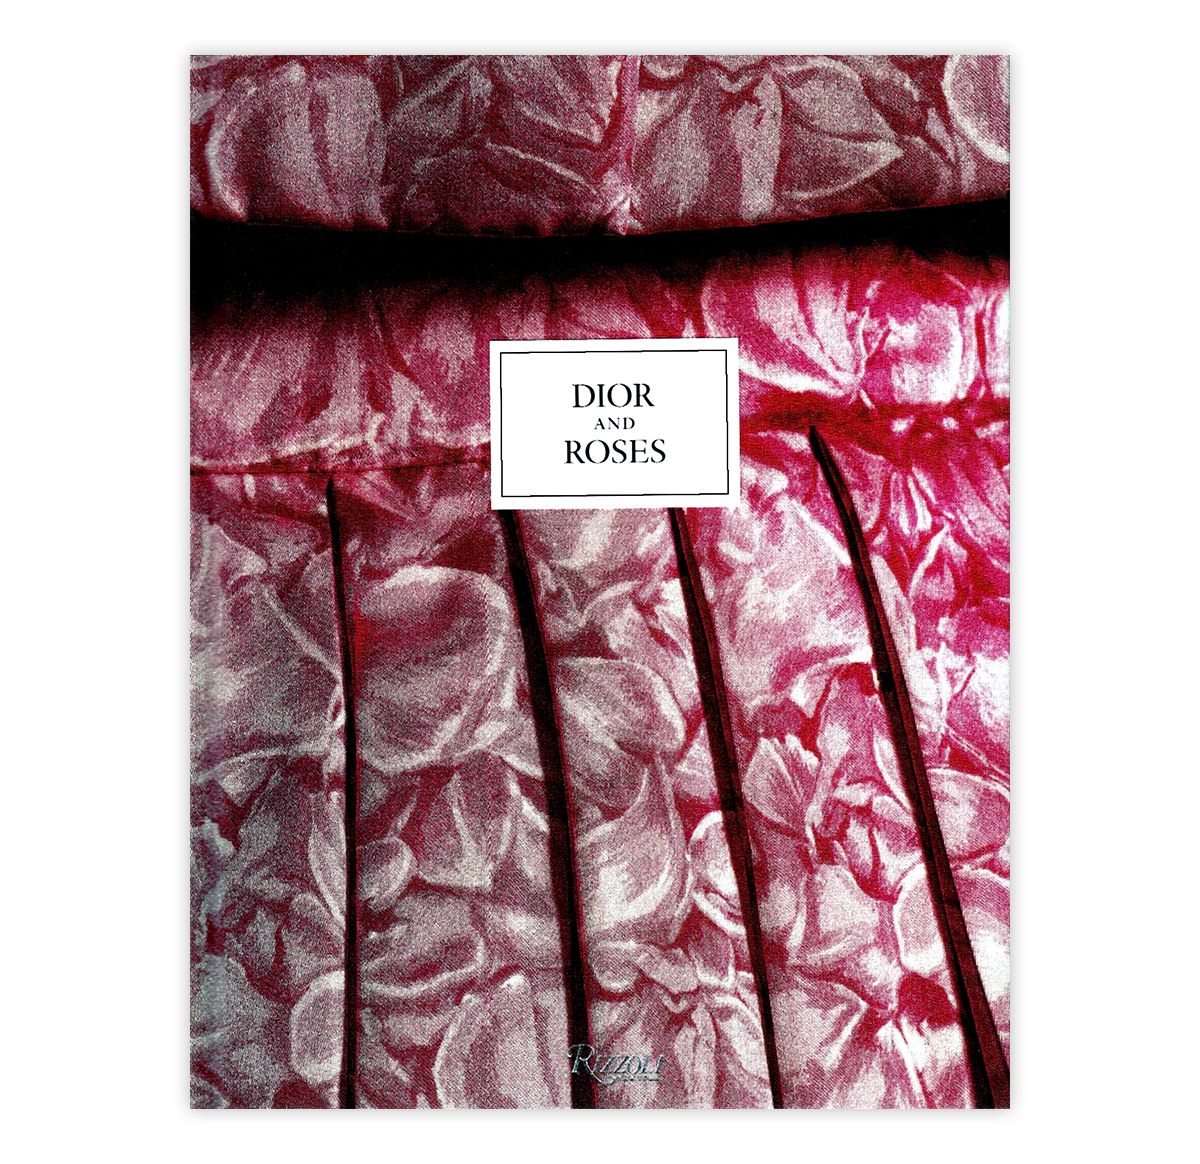 Dior and Roses. Издательство Rizzoli, фото 1